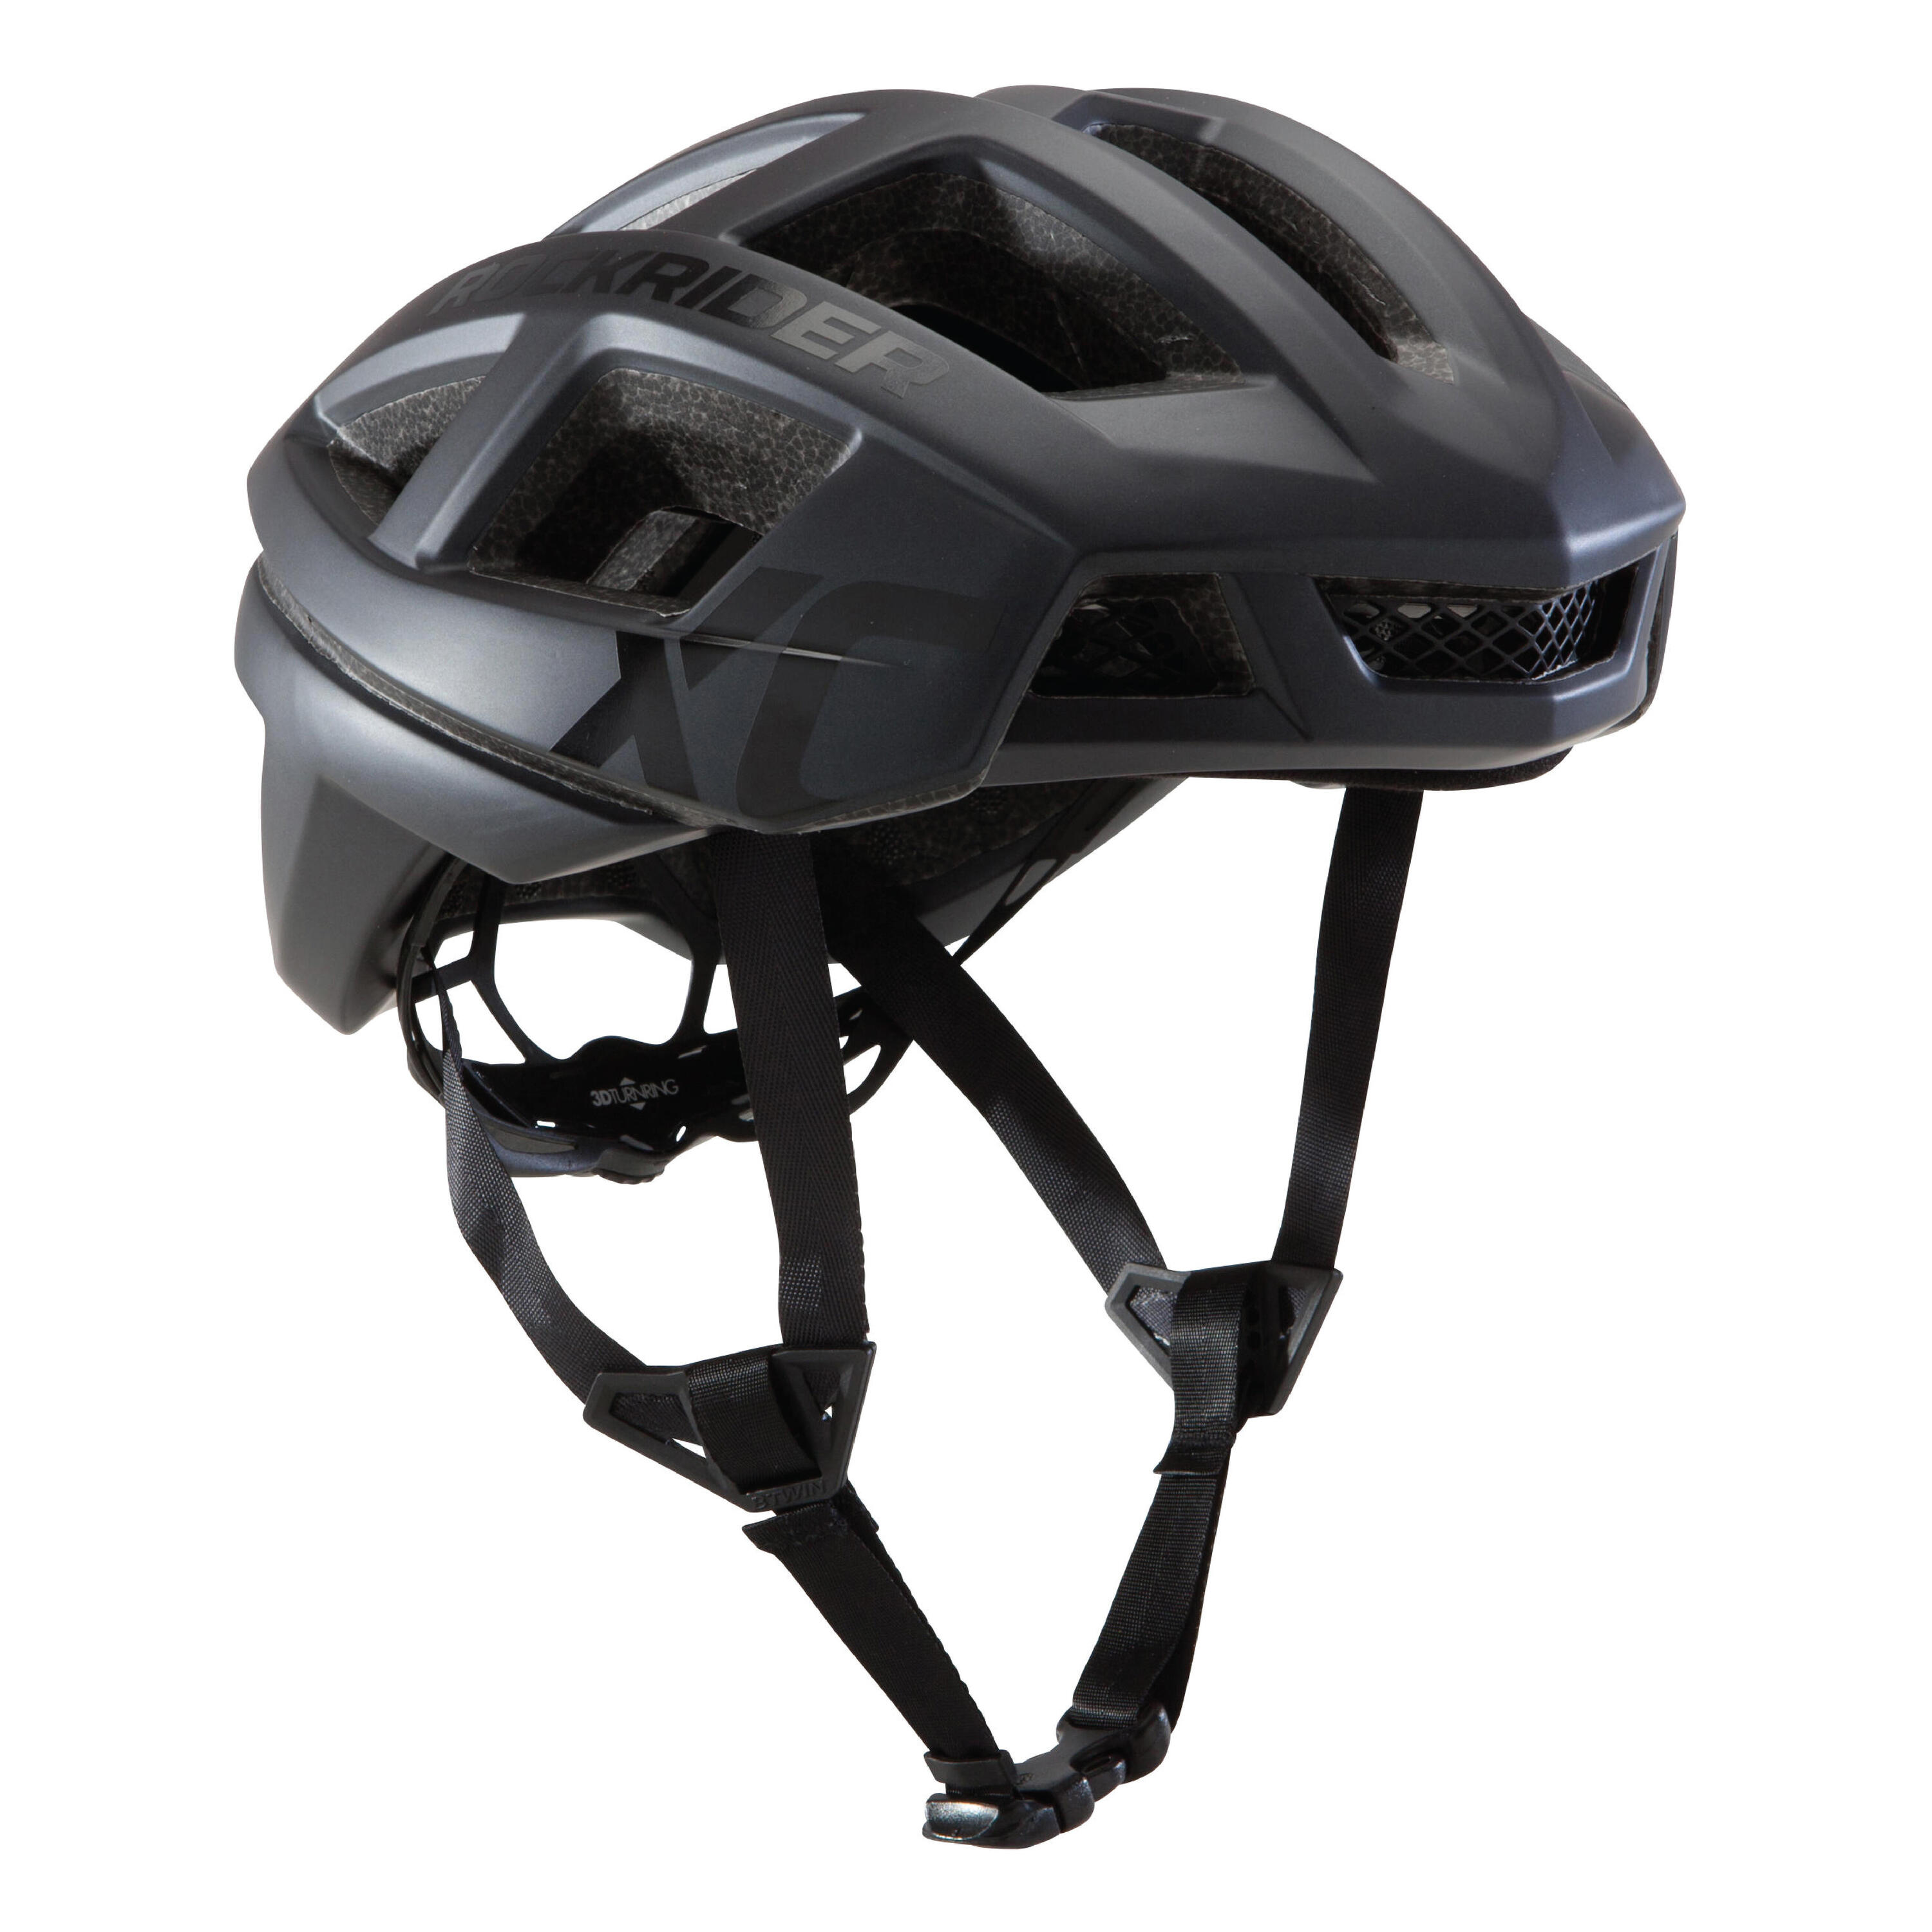 ROCKRIDER XC Mountain Bike Helmet - Black